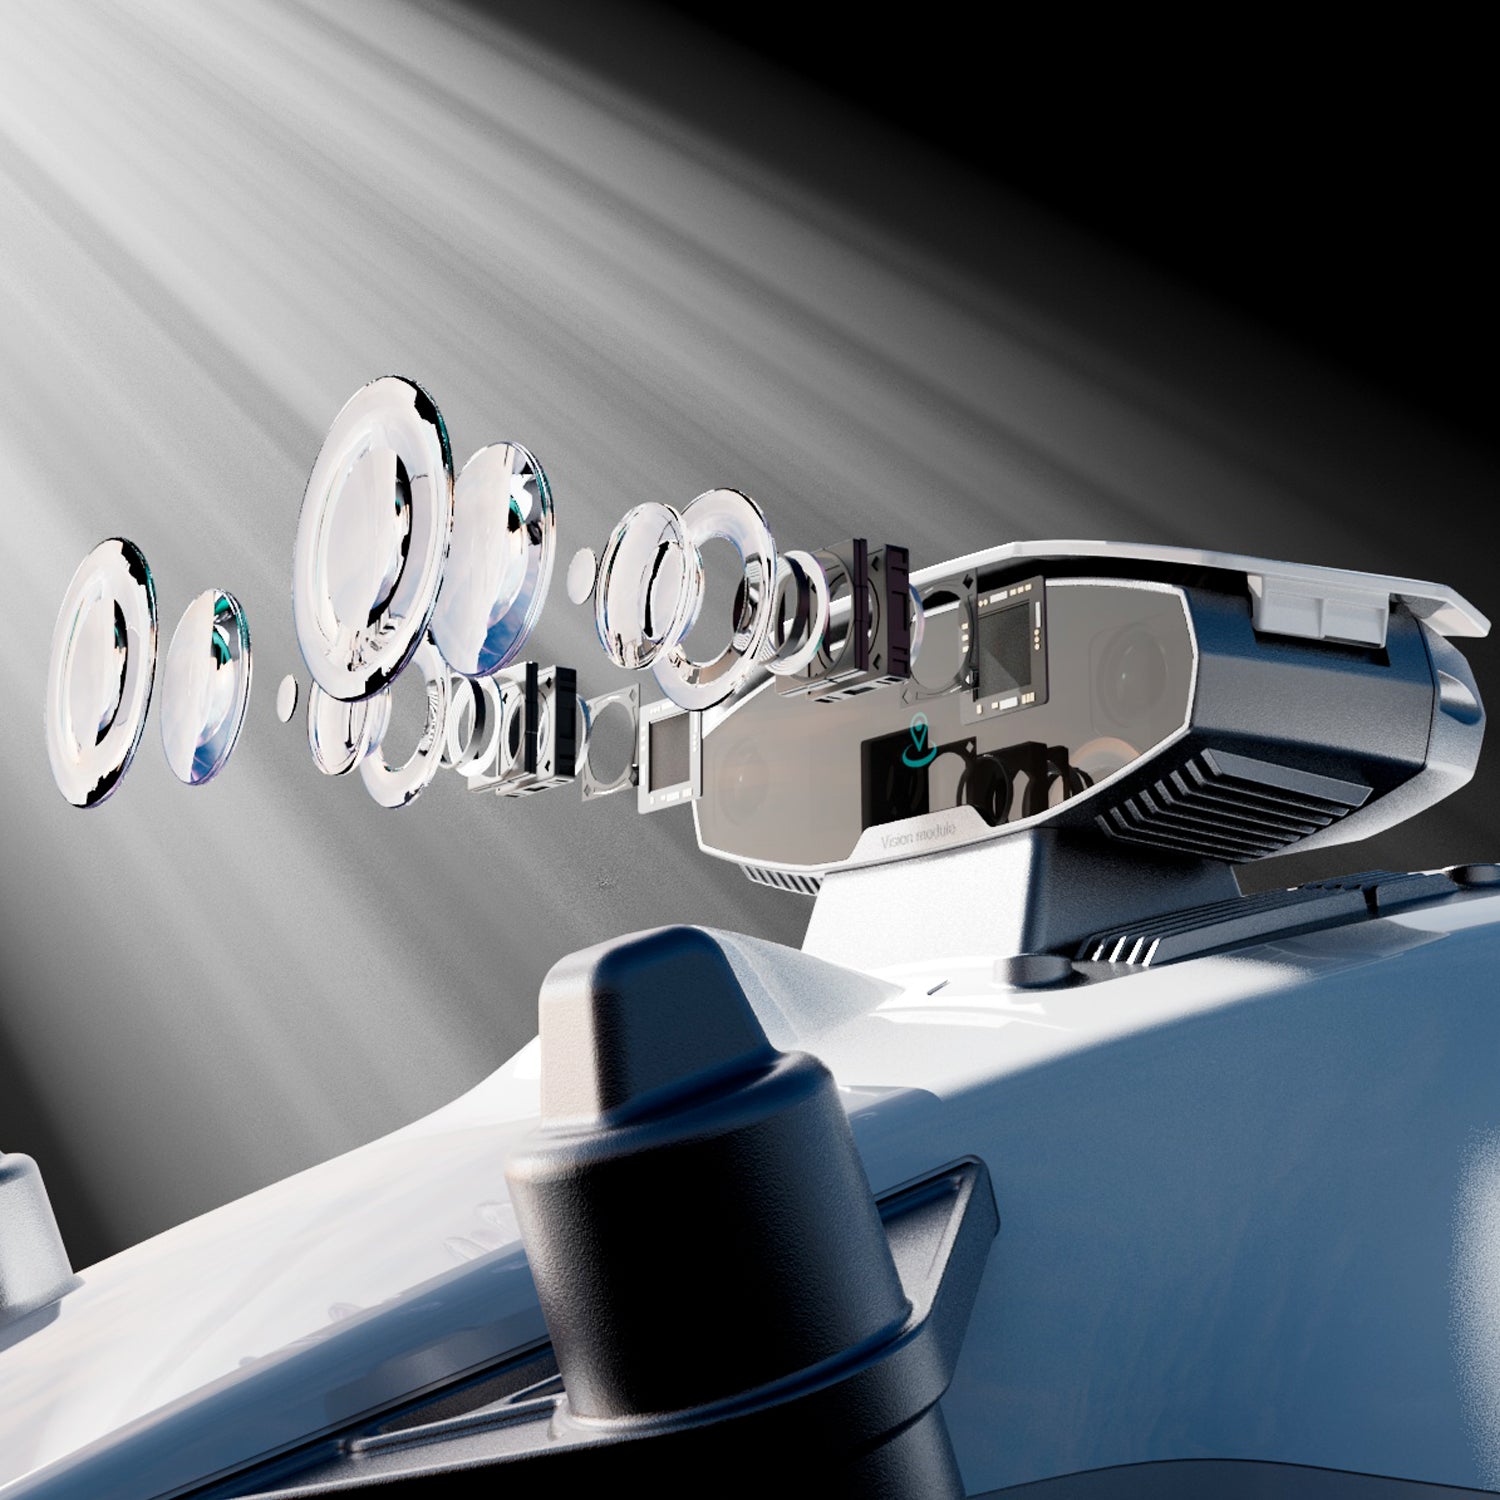 3D Vision rasenmäher roboter - mammotion luba 2 awd 5000